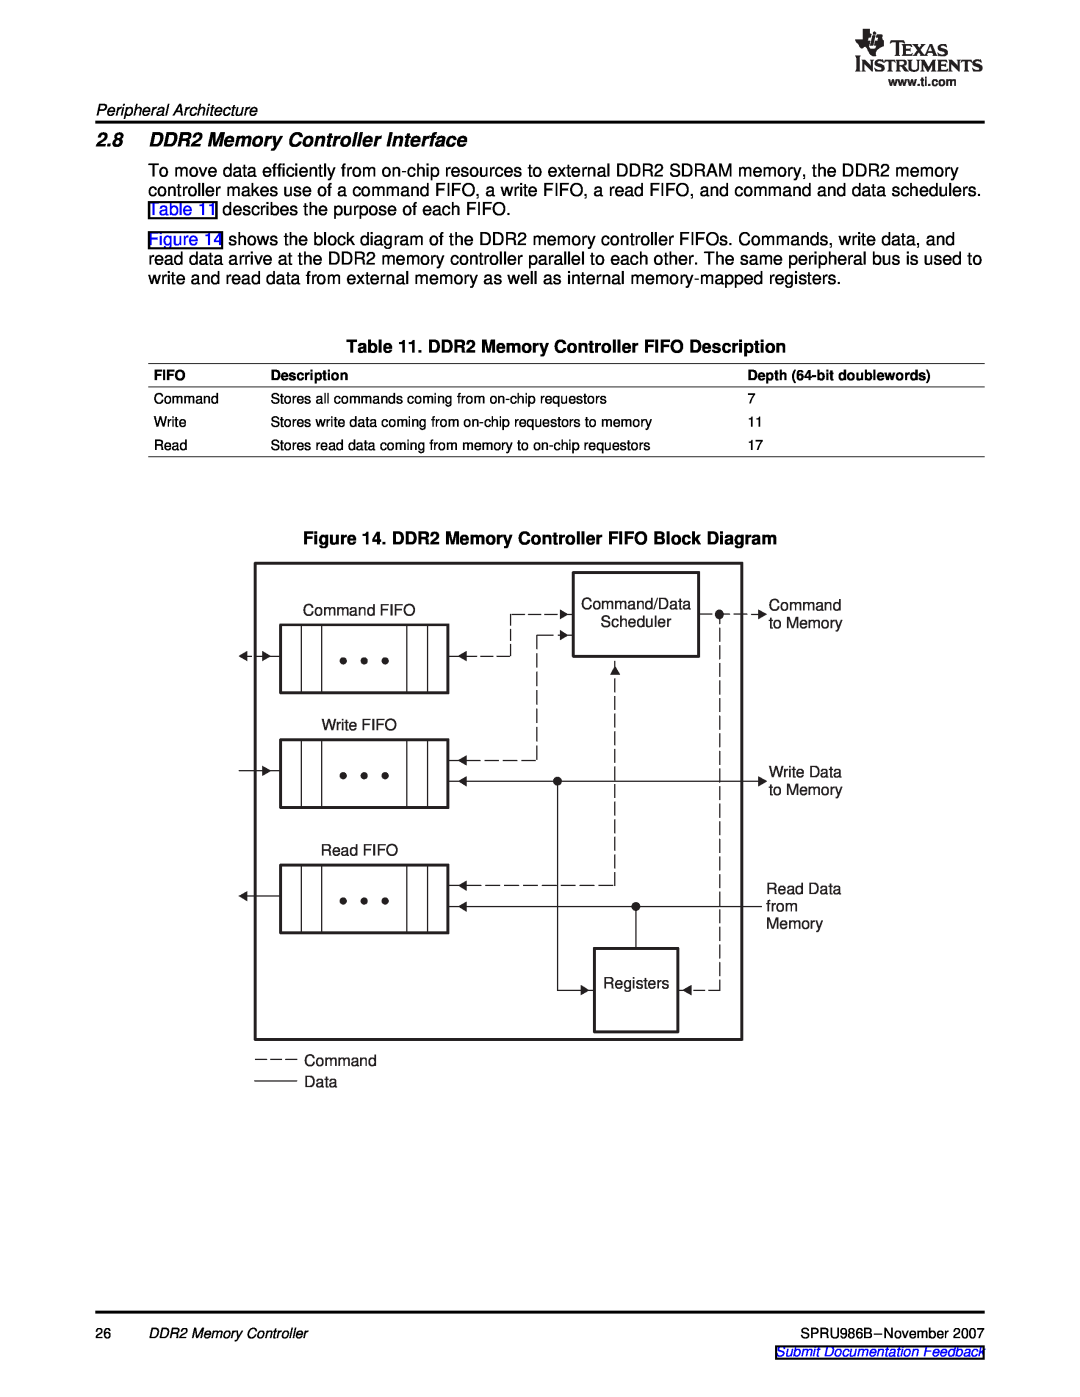 Texas Instruments TMS320DM643 manual 2.8 DDR2 Memory Controller Interface, DDR2 Memory Controller FIFO Description 